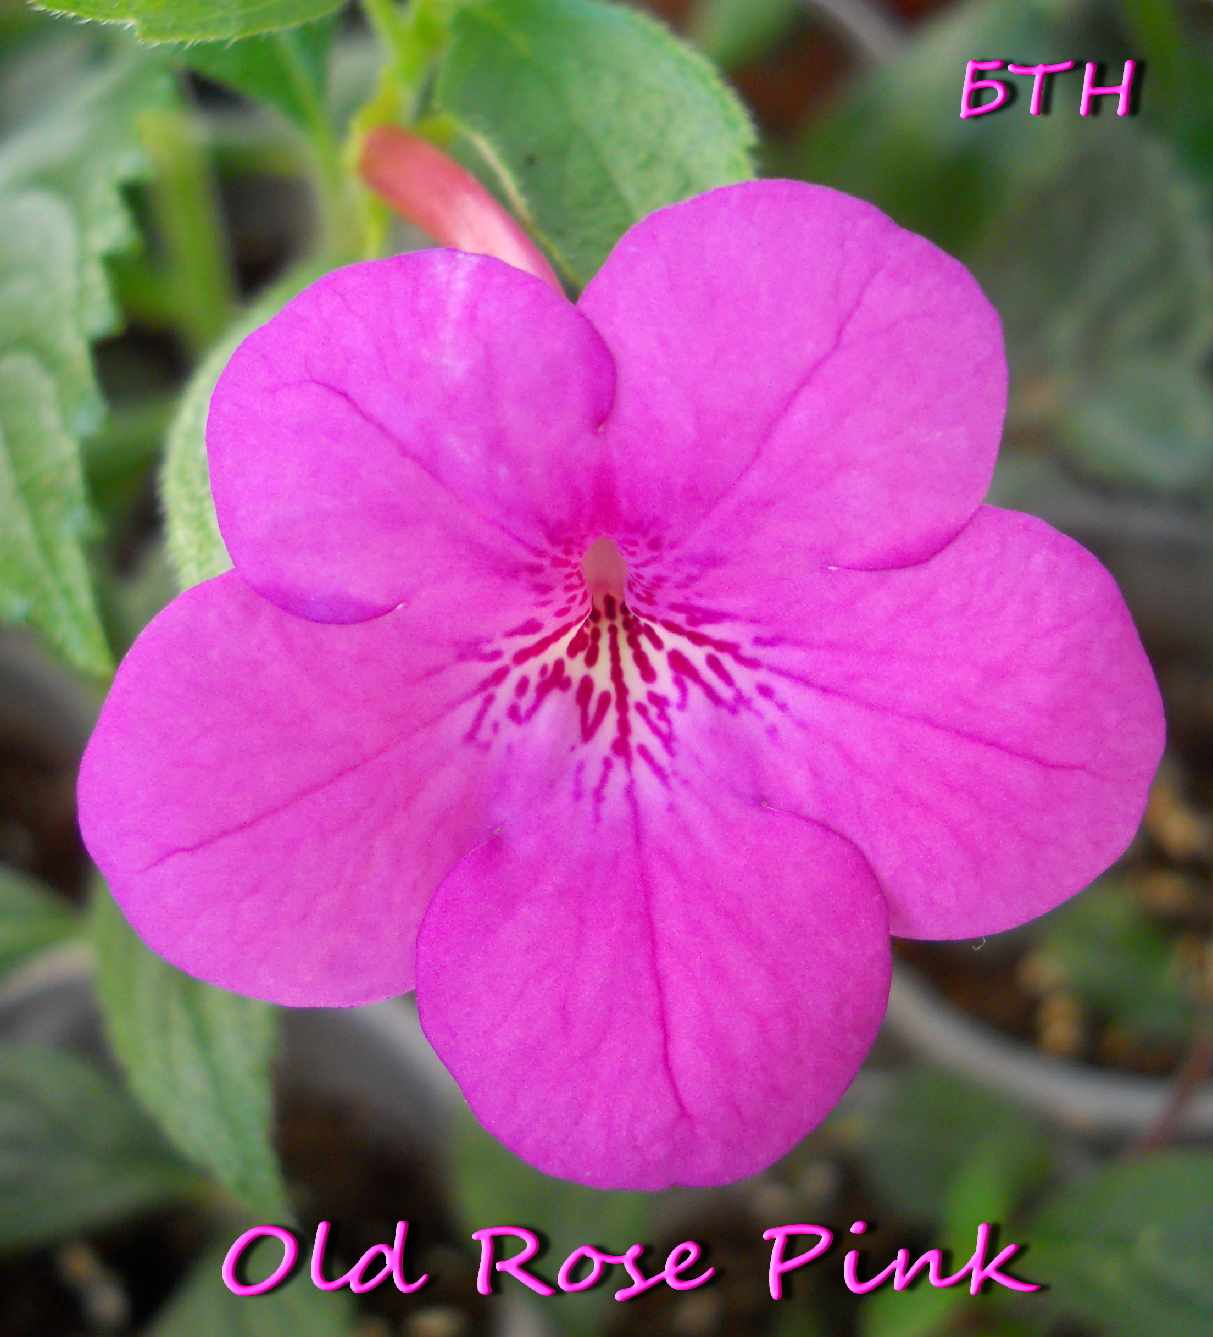  Old Rose Pink 